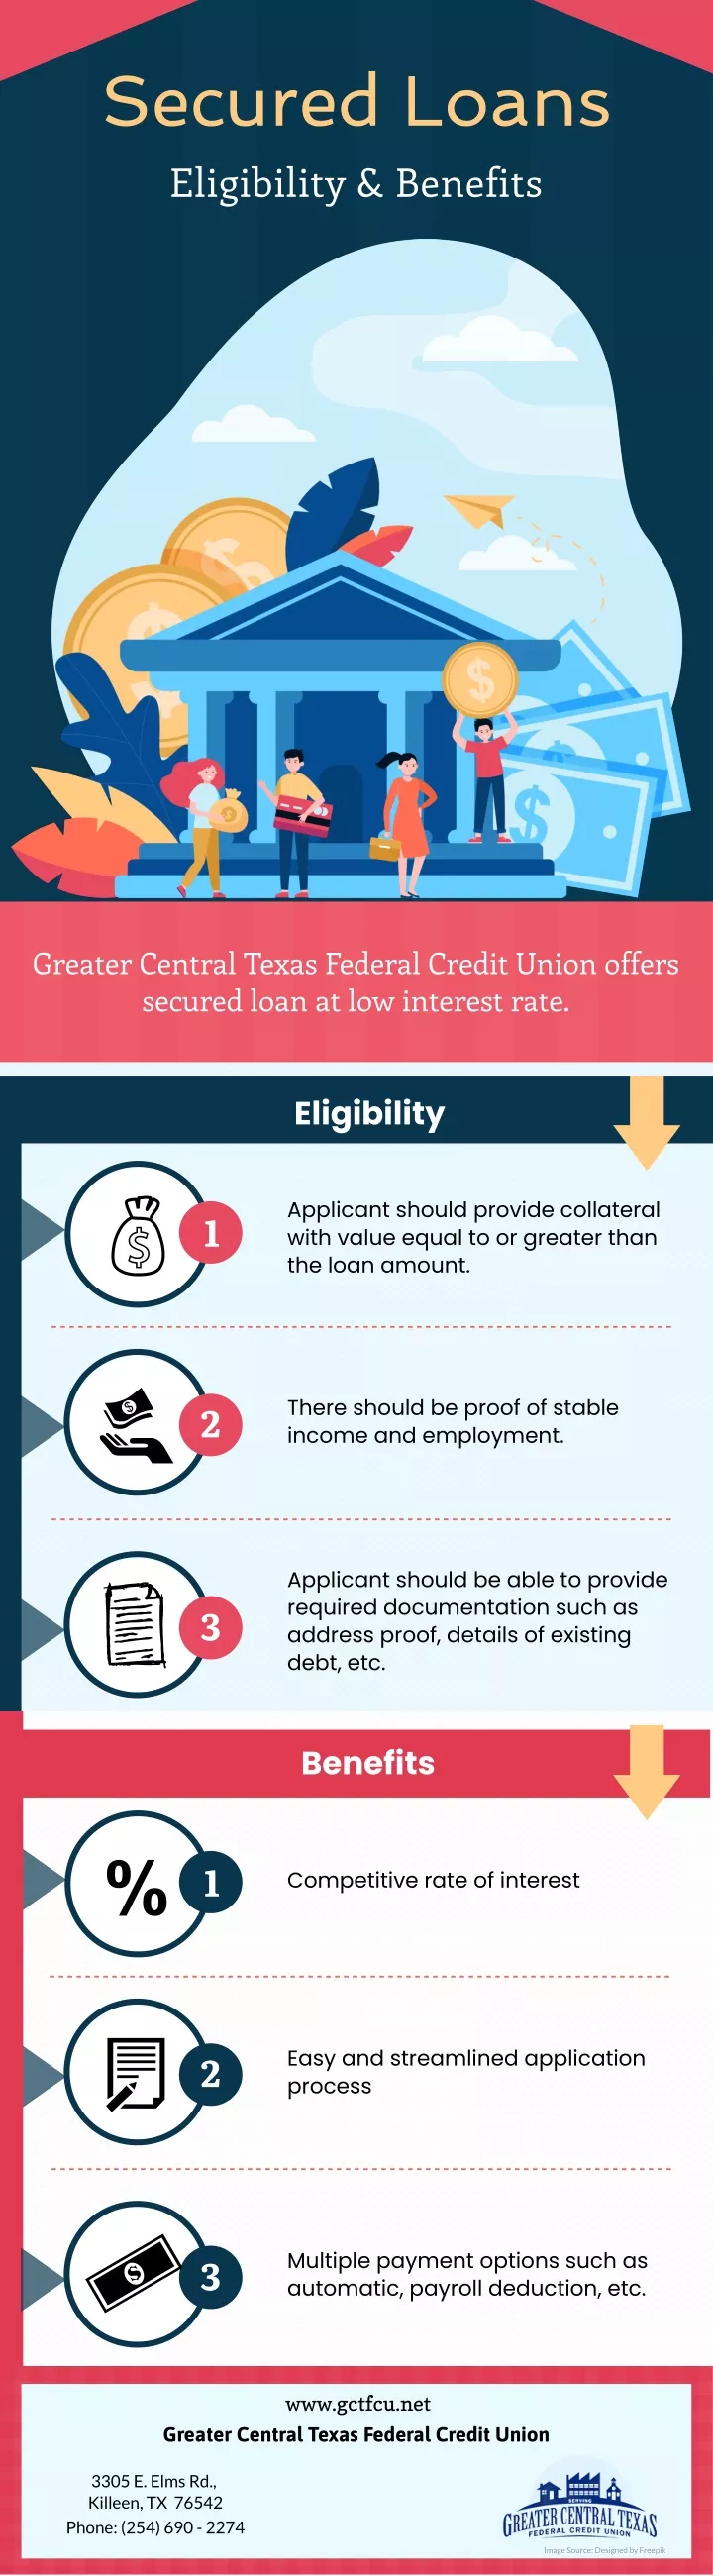 secured loans eligibility benefits